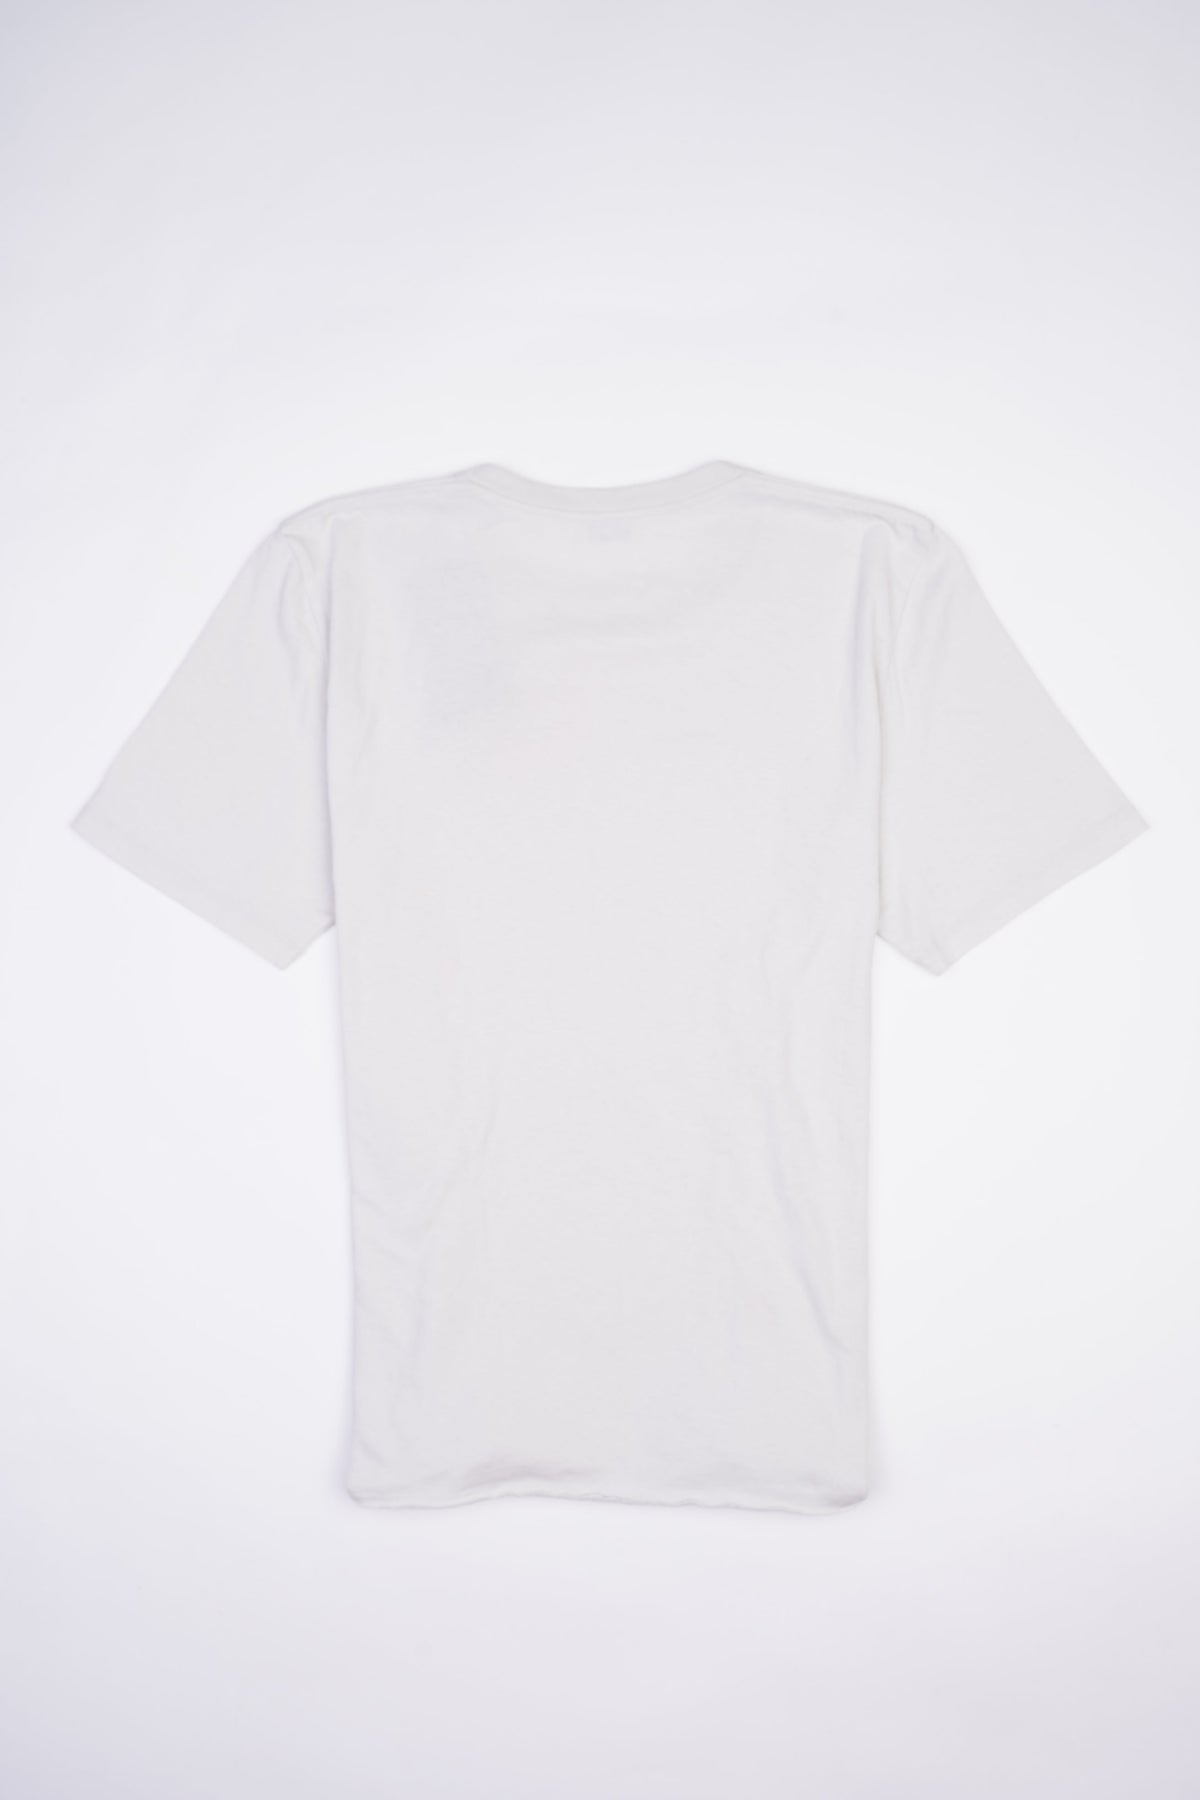 Cheap Logo Heart Louis Vuitton T Shirt Sale, Louis Vuitton White T Shirt  Womens - Allsoymade